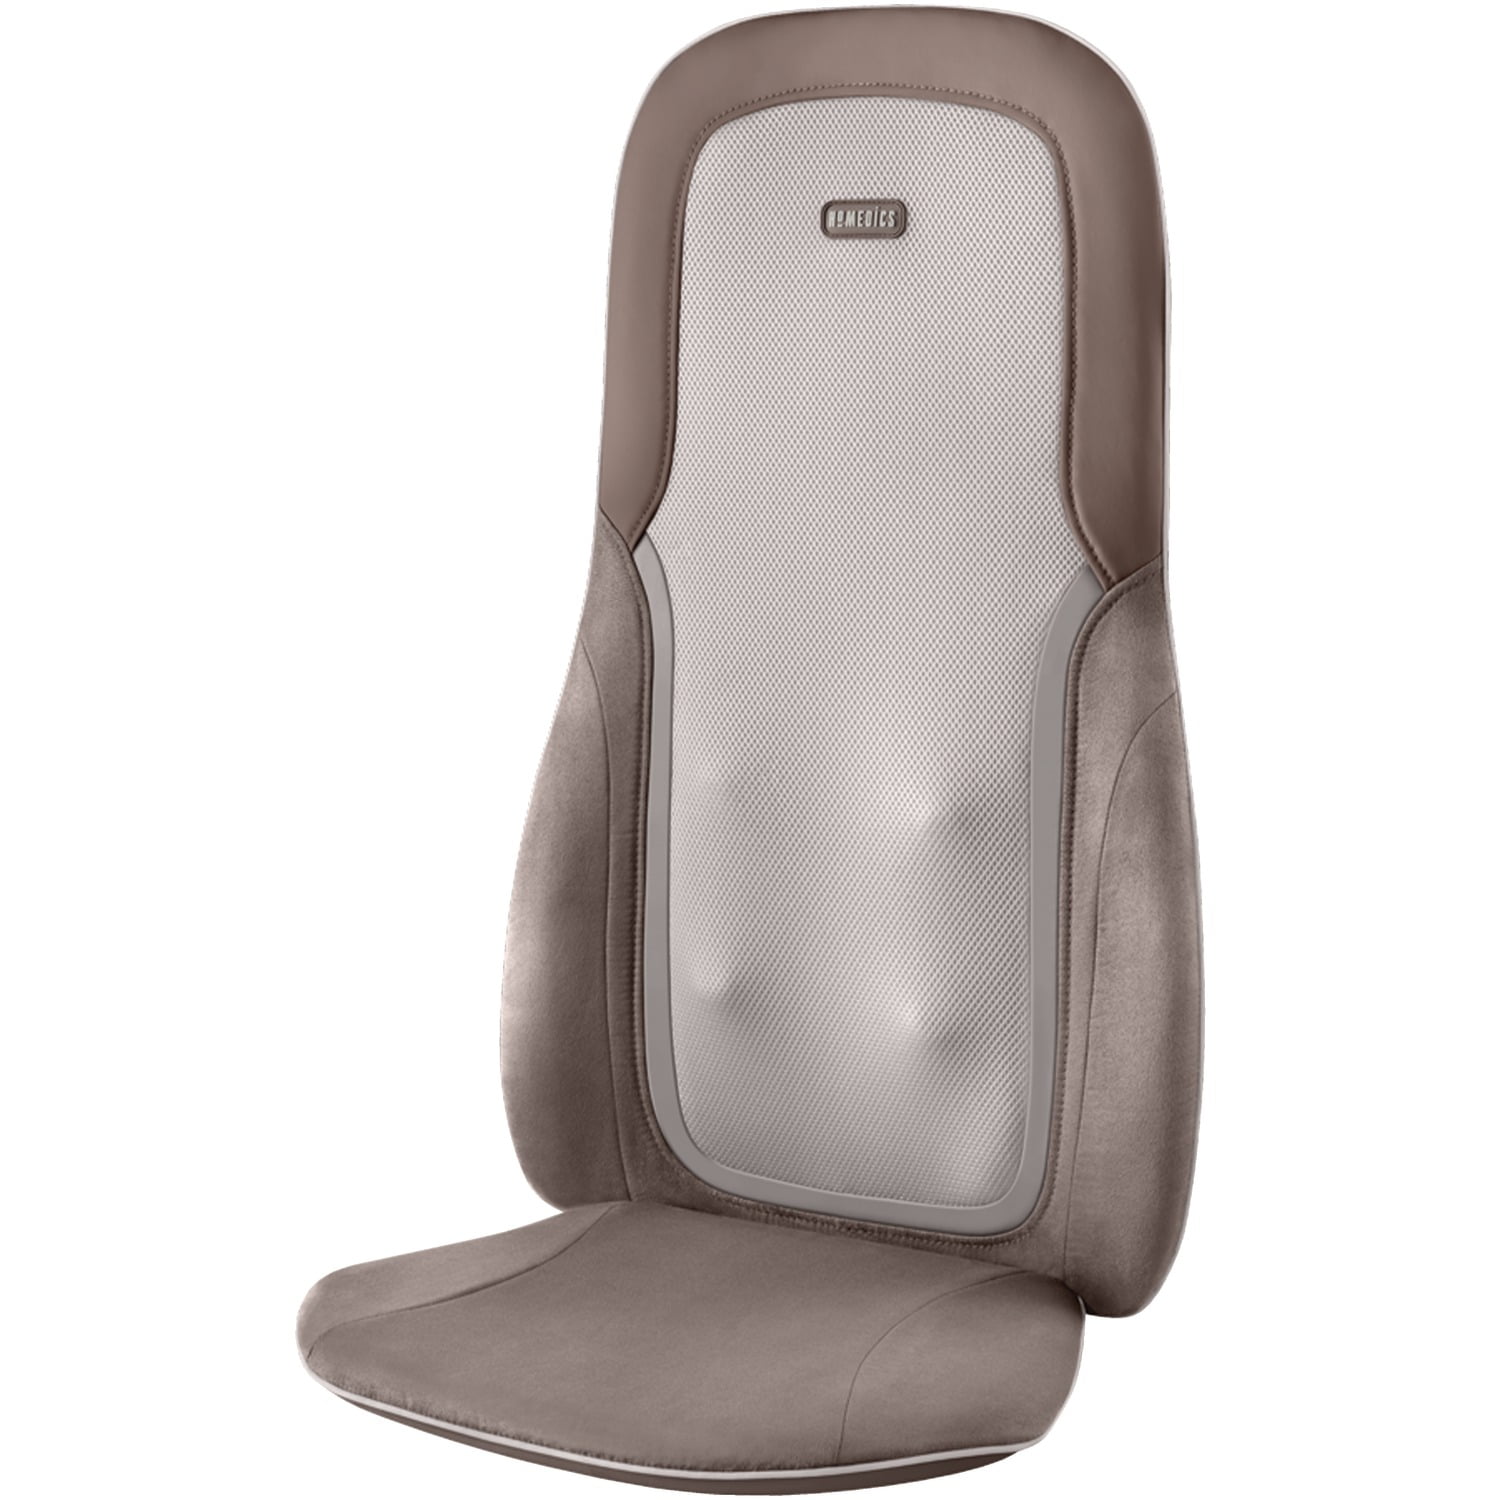 HoMedics Portable Back Massage Cushion with Heat, Color: Multi